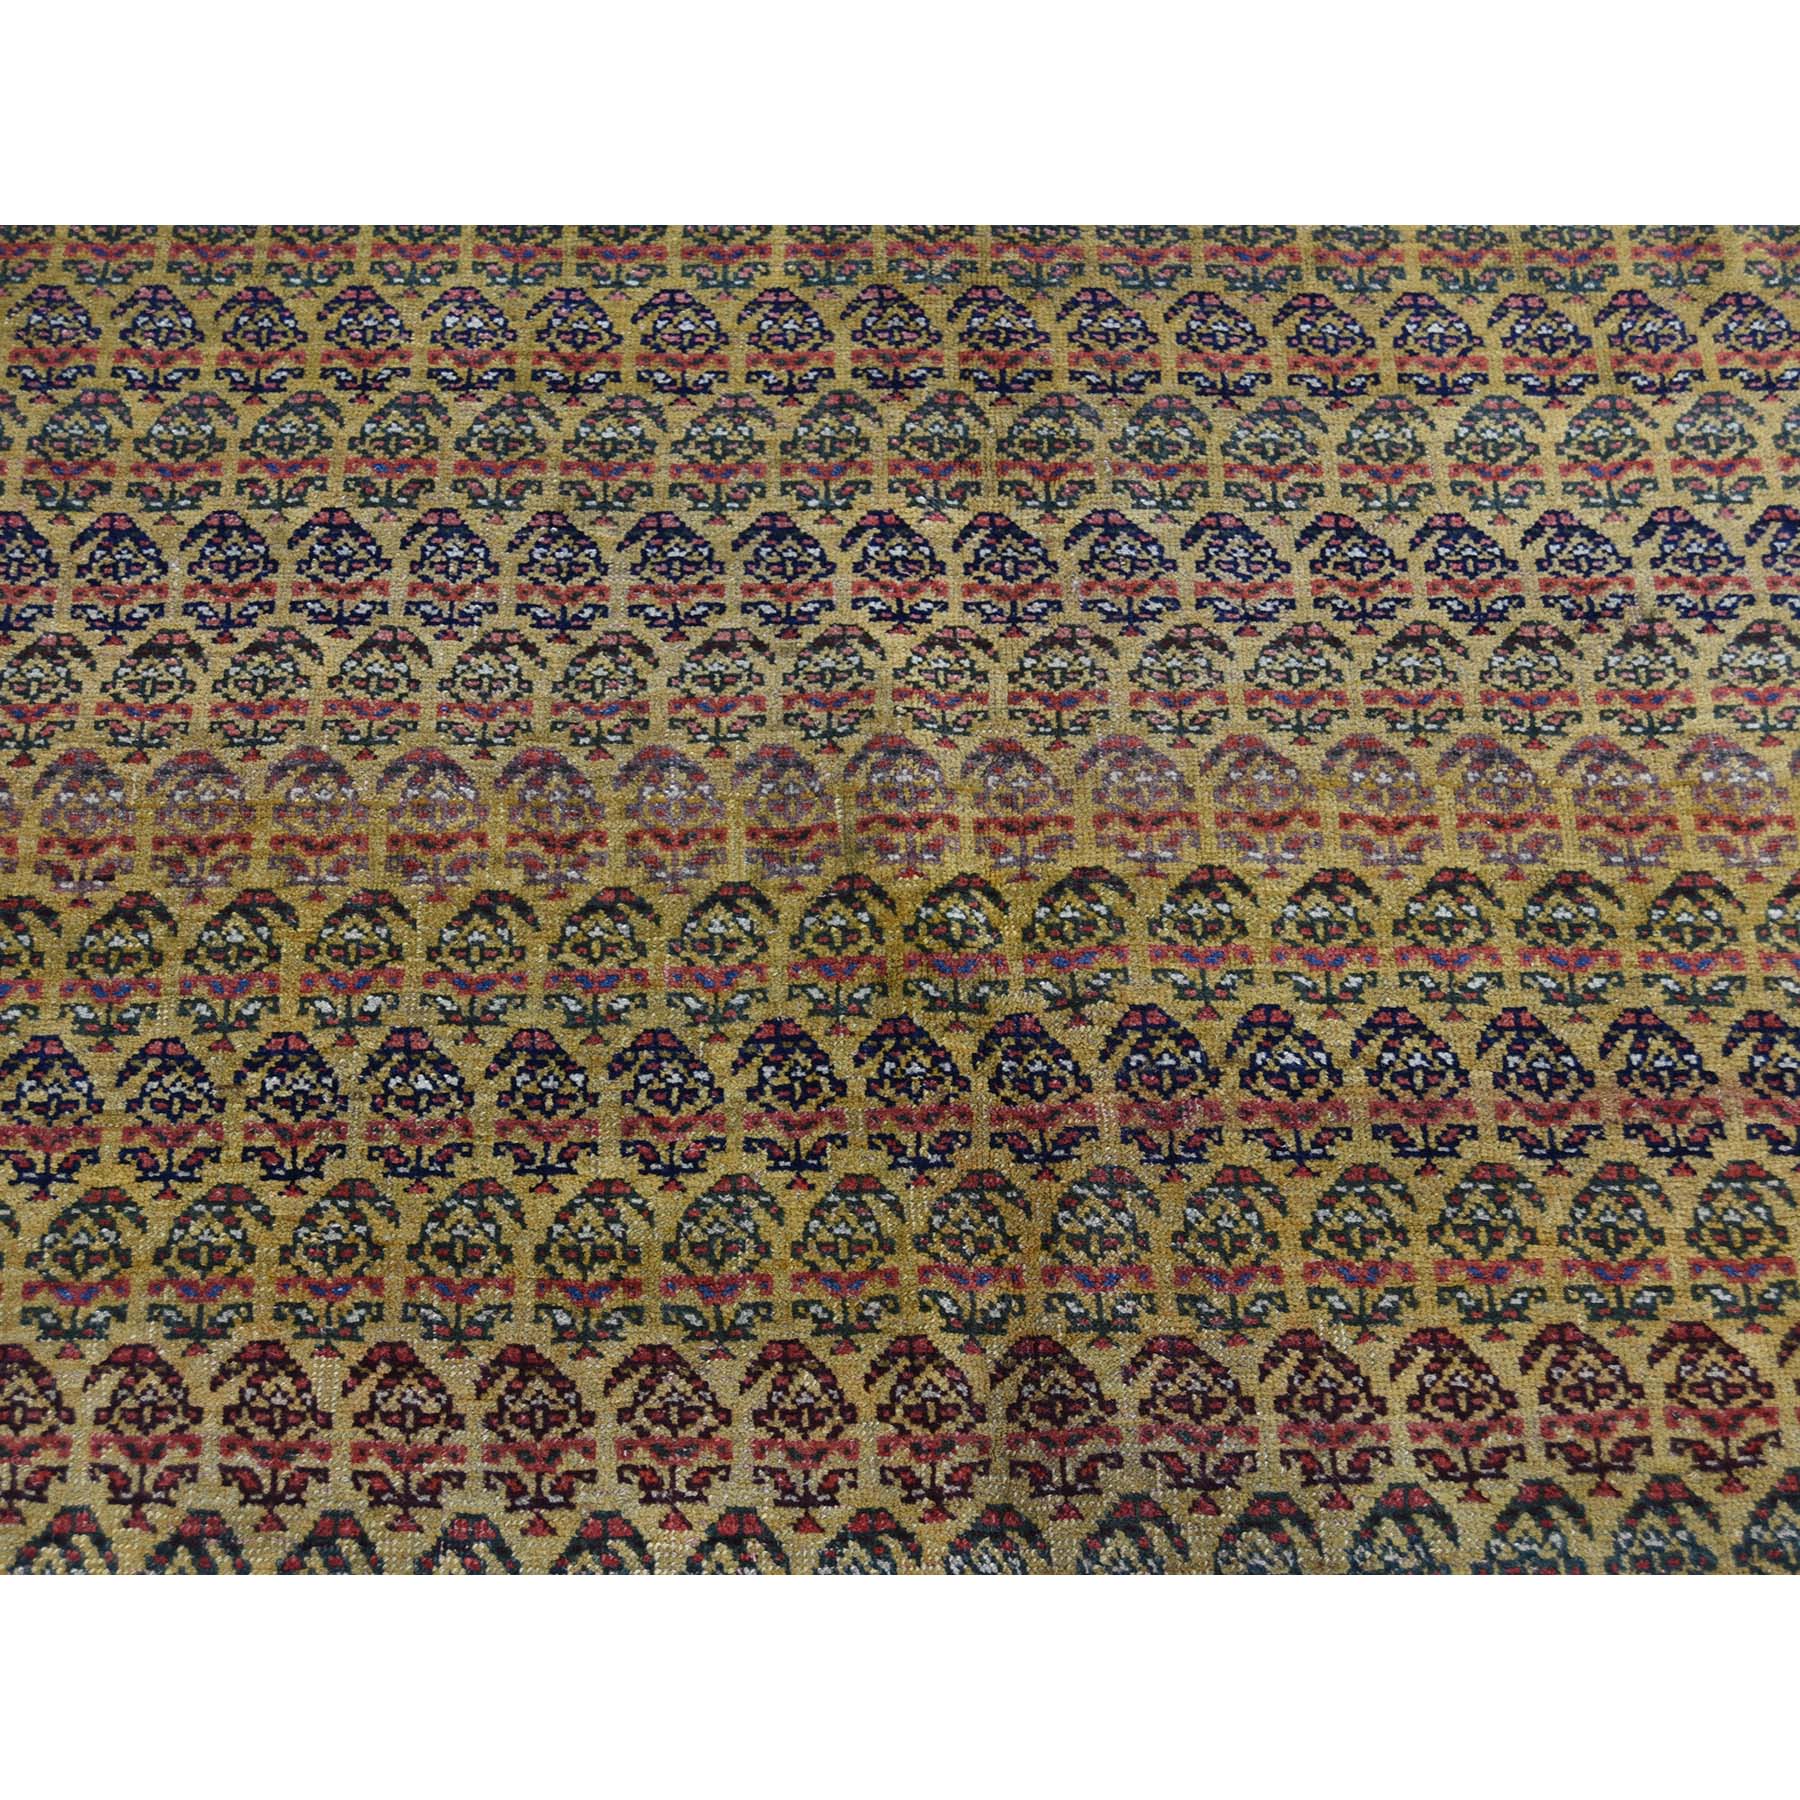 5-1 x9-10  Antique Persian Bijar Exc Cond Wide Runner Oriental Rug 